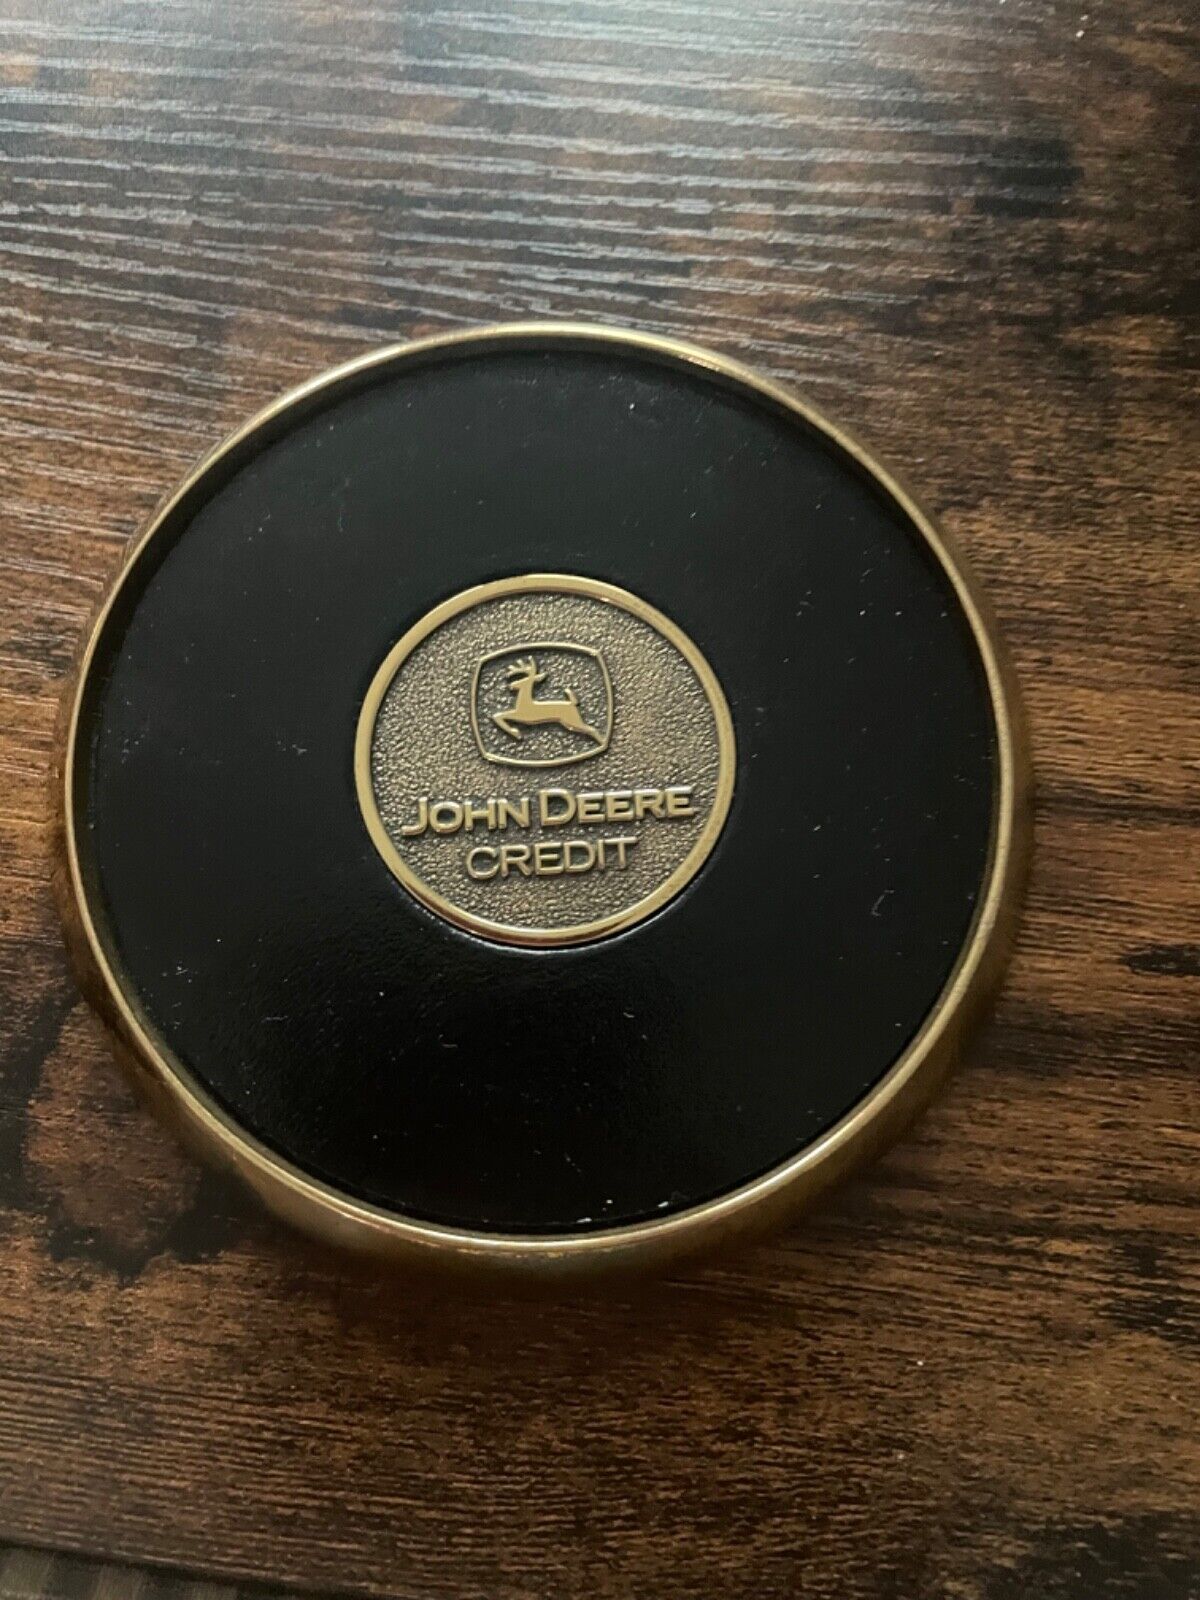 Vintage John Deere Credit Brass Coasters (6) w/Cork Bottom  VERY GOOD condition